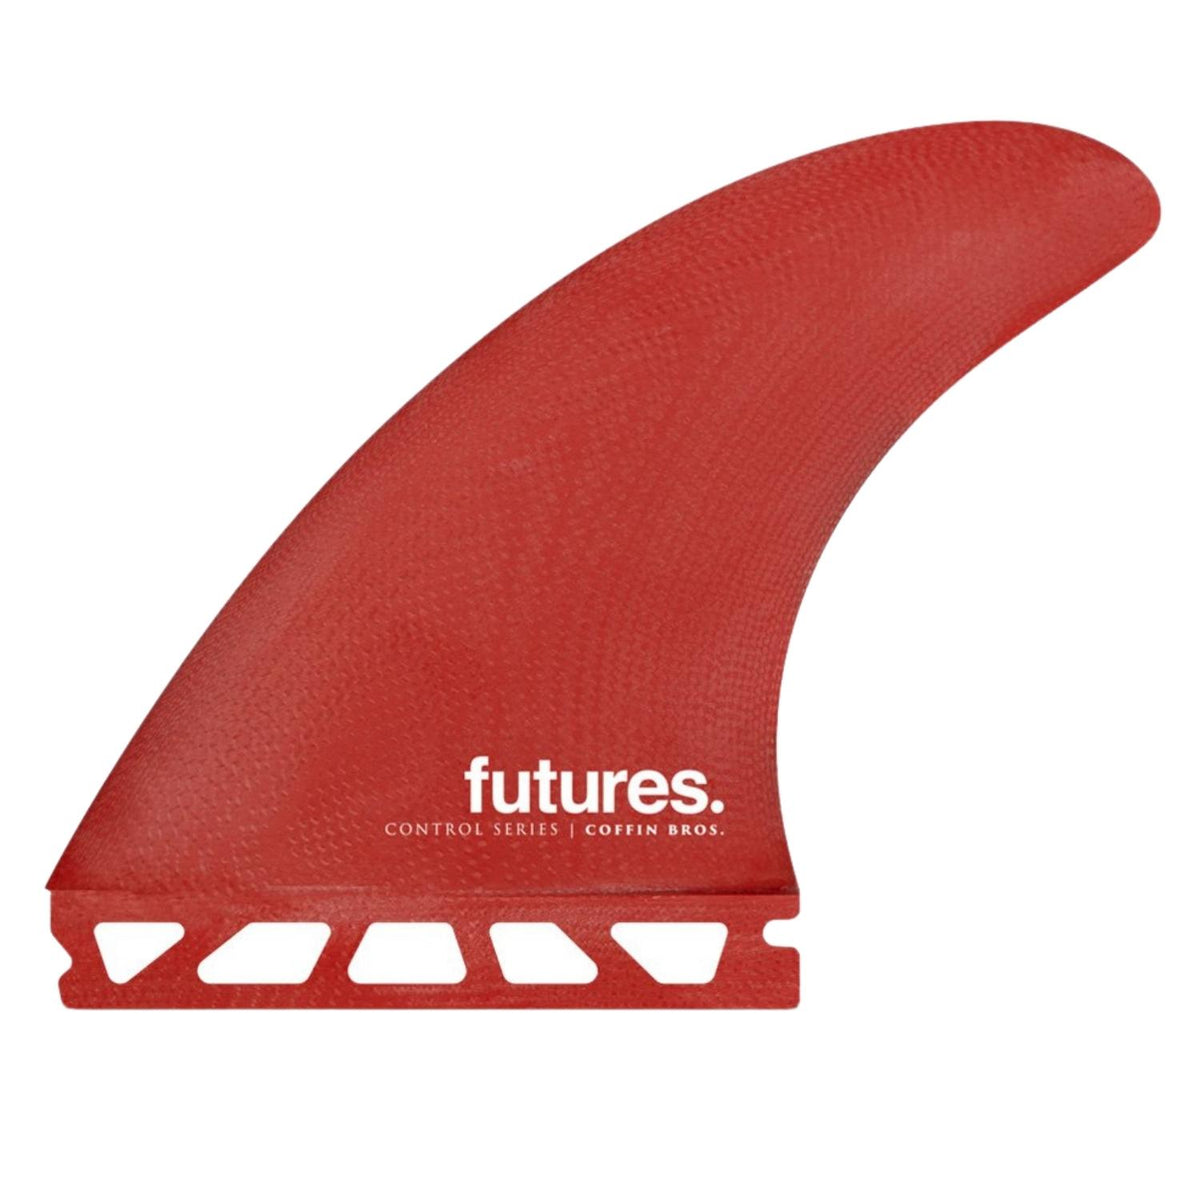 Futures Coffin Bros Thruster Surfboard Fins (Medium) - Red/Black - Futures Fins by Futures Medium Fins